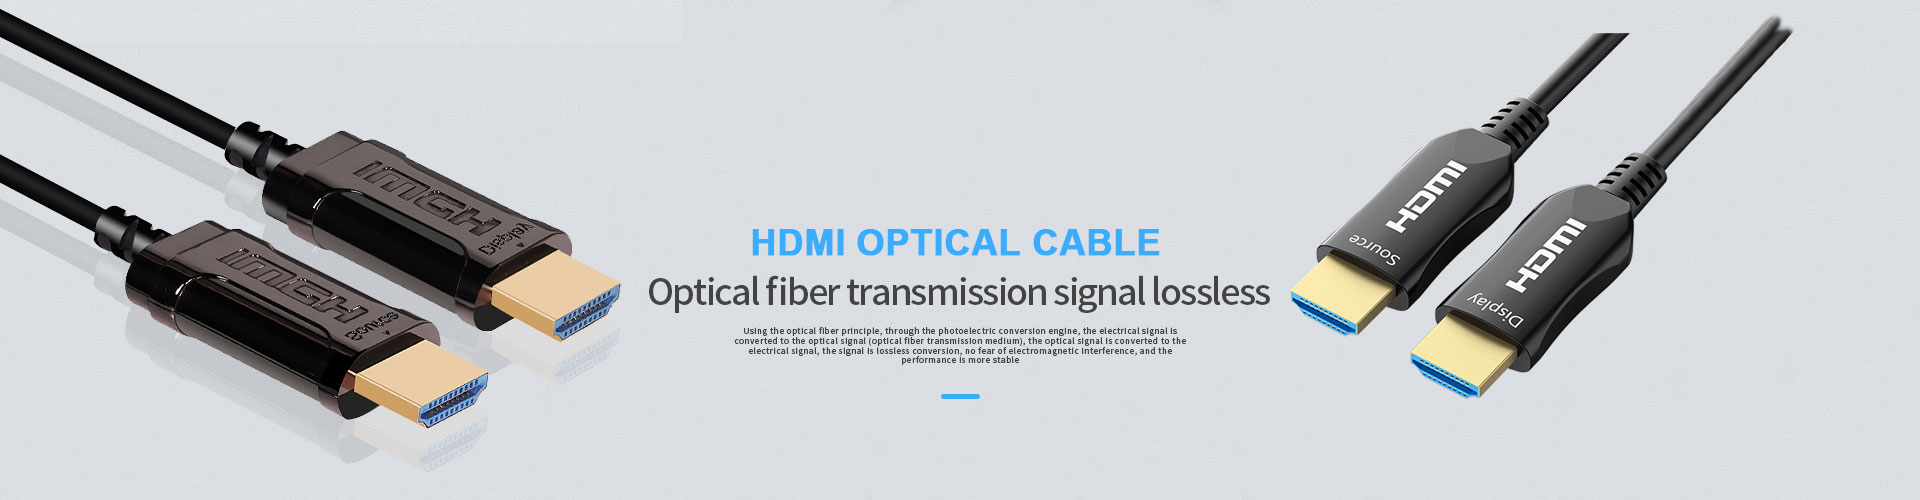 西宁Fiber HDMI